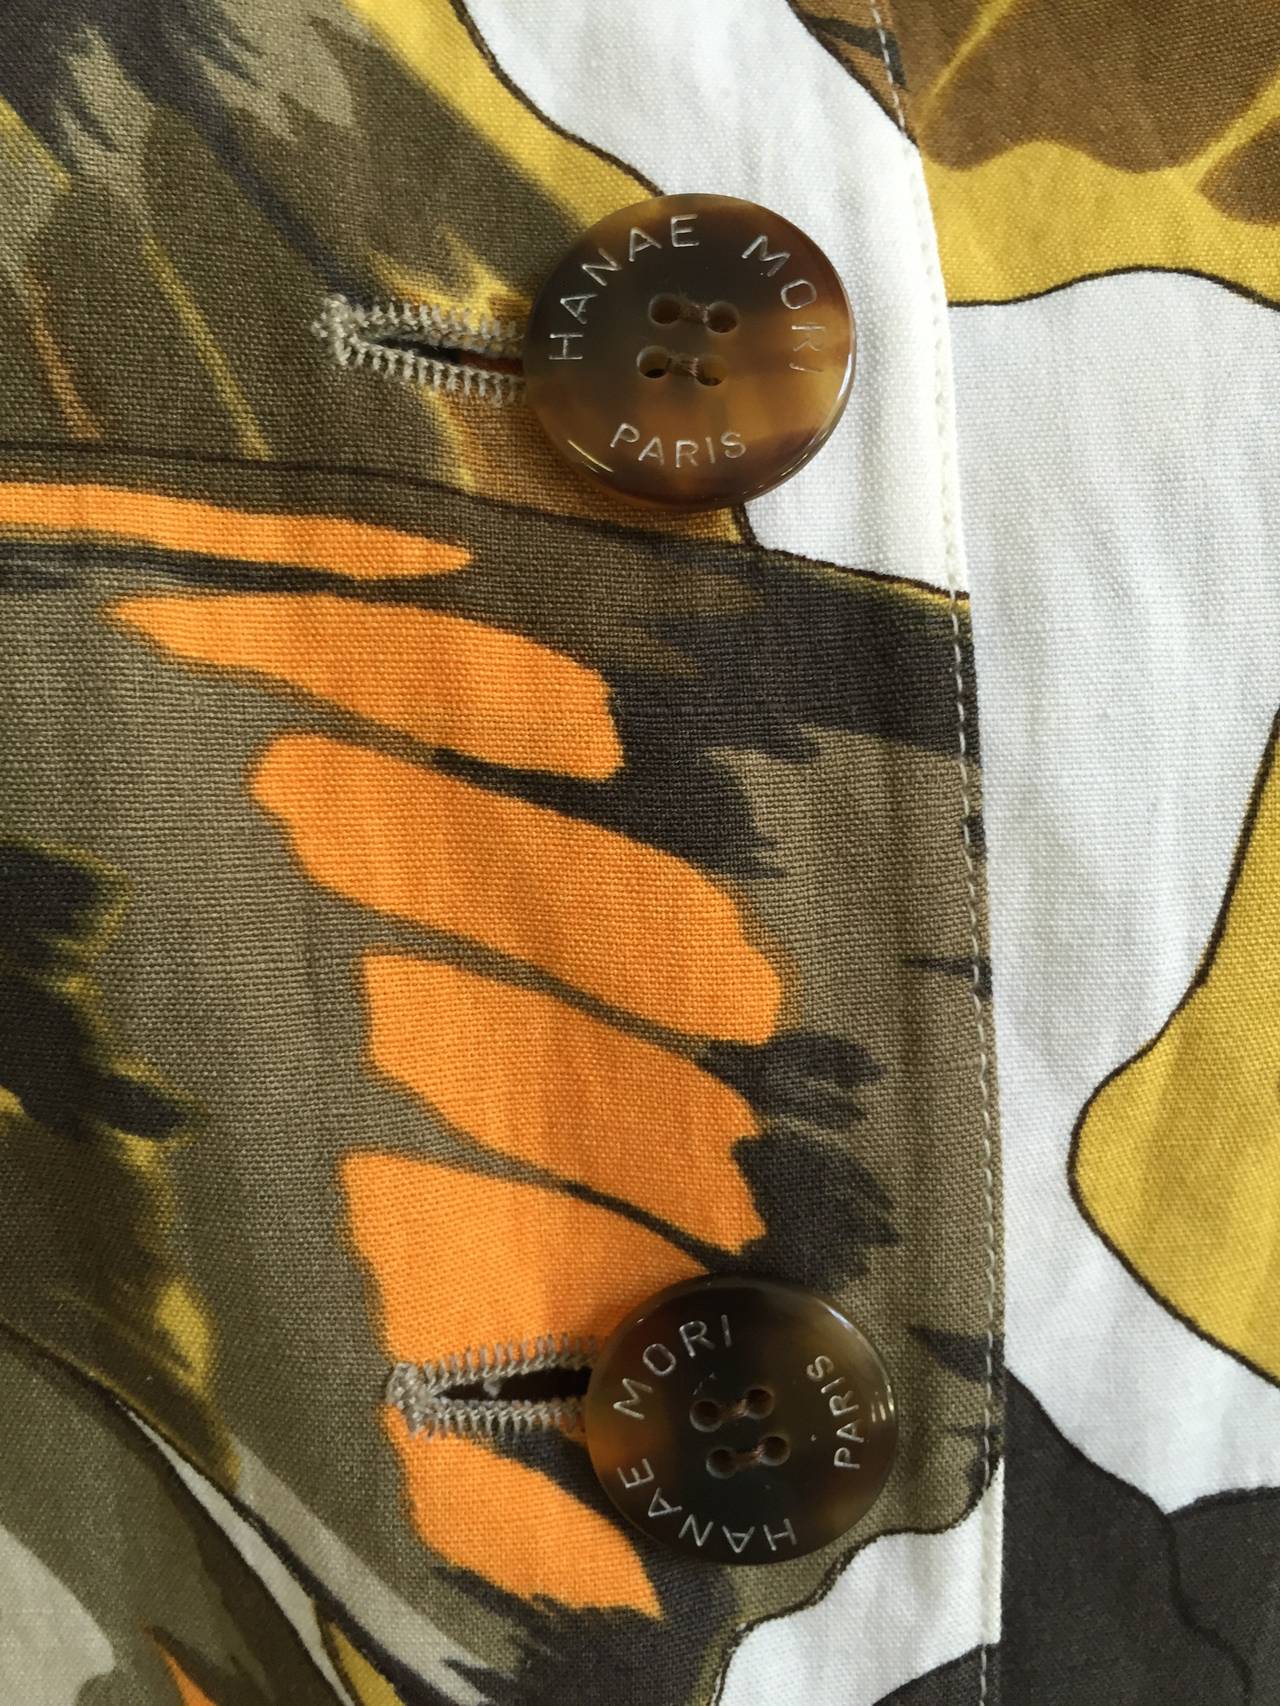 Brown Hanae Mori Paris Linen Asian Butterfly Jacket size 8. Never Worn. For Sale